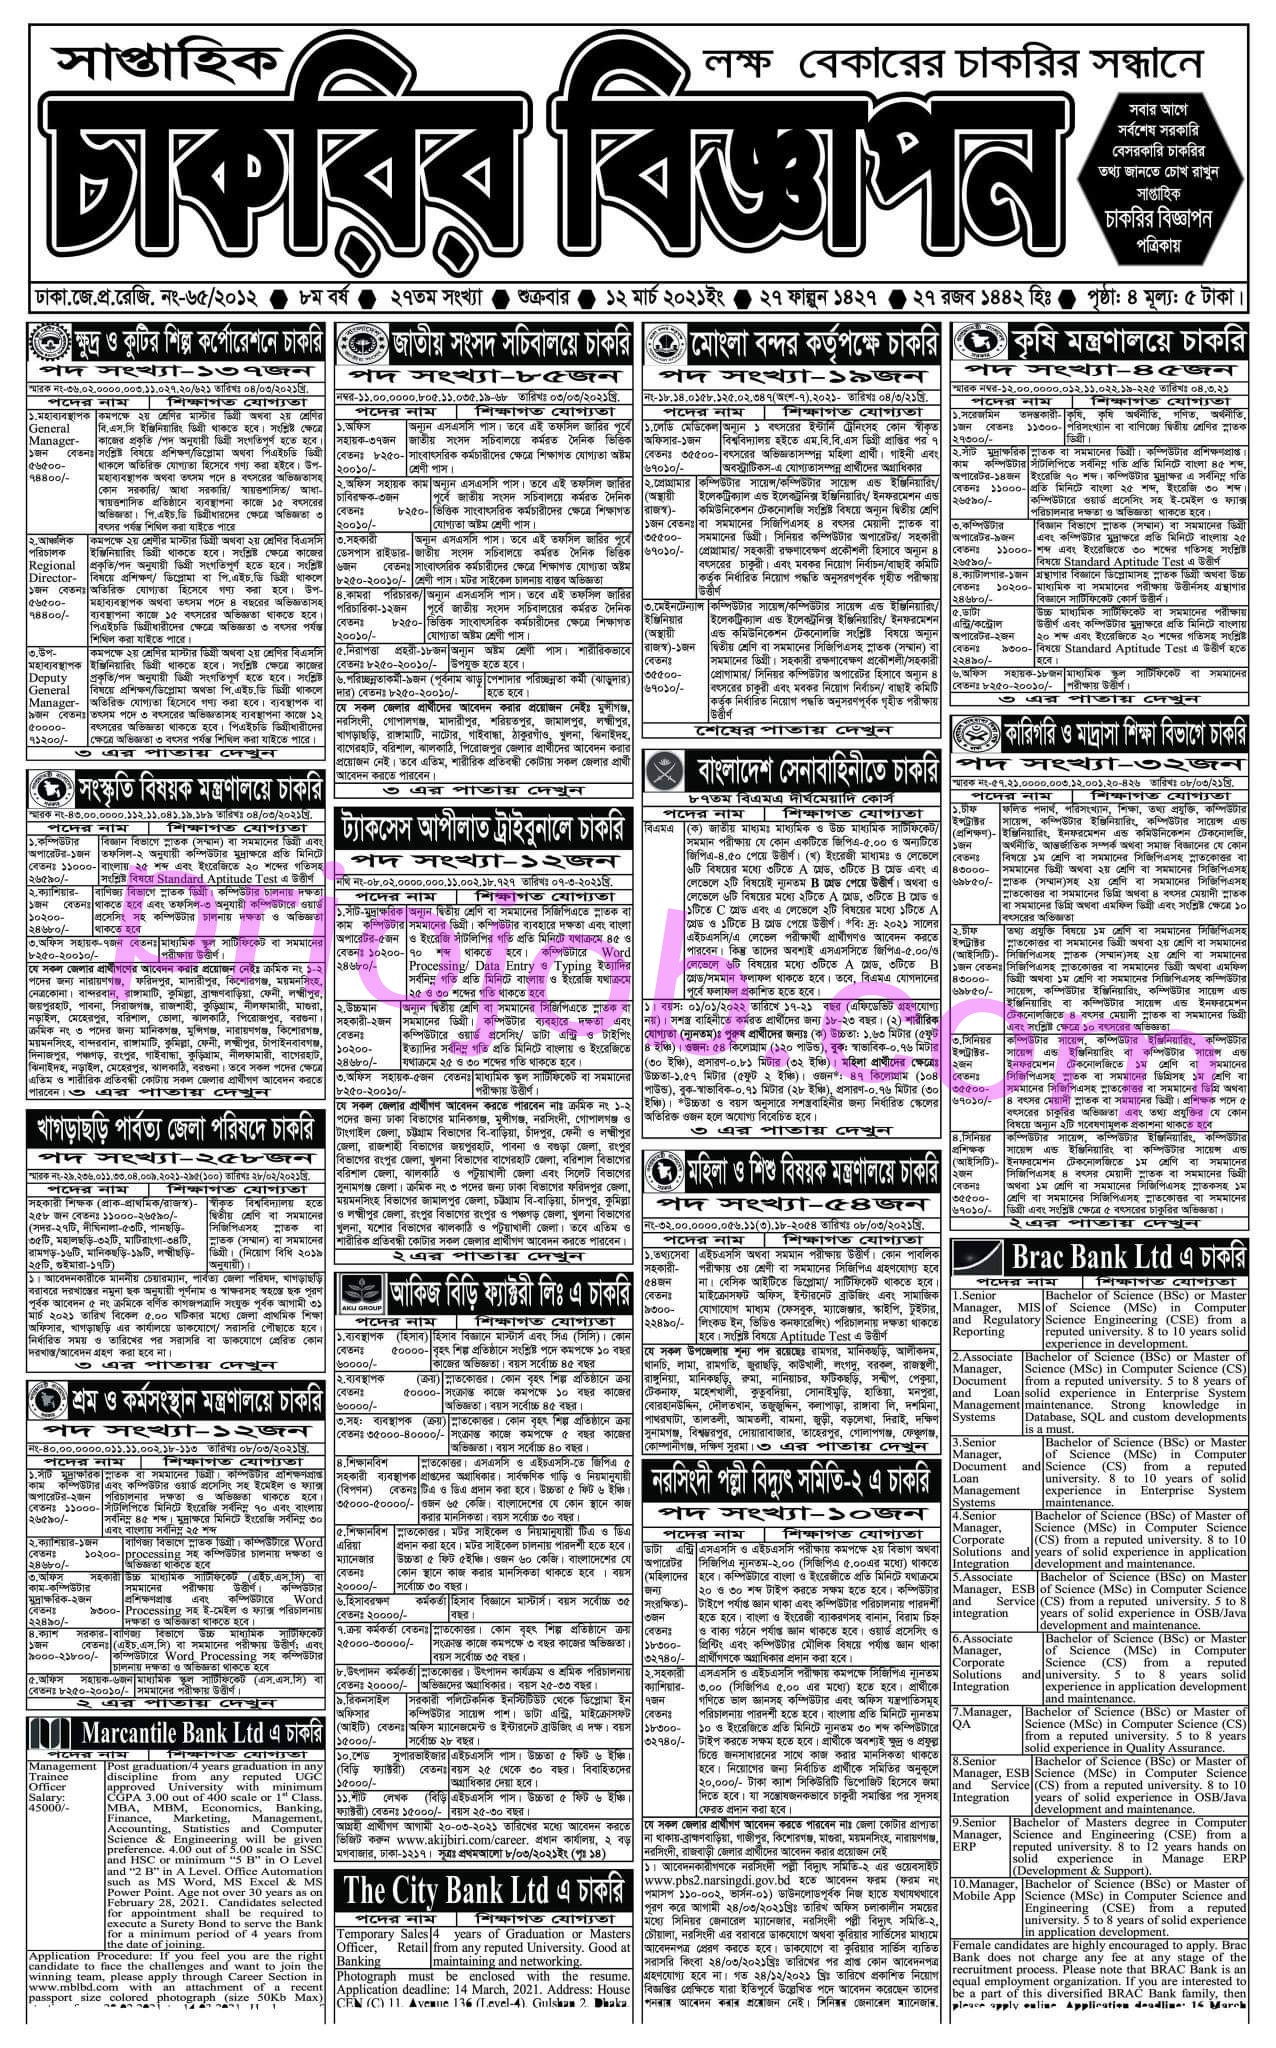 Saptahik Chakrir Biggapon potrika 12-03-2021 - Weekly Chakrir Biggapon Newspaper 12 March 2021 - সাপ্তাহিক চাকরির বিজ্ঞাপন পত্রিকা ১২ মার্চ ২০২১